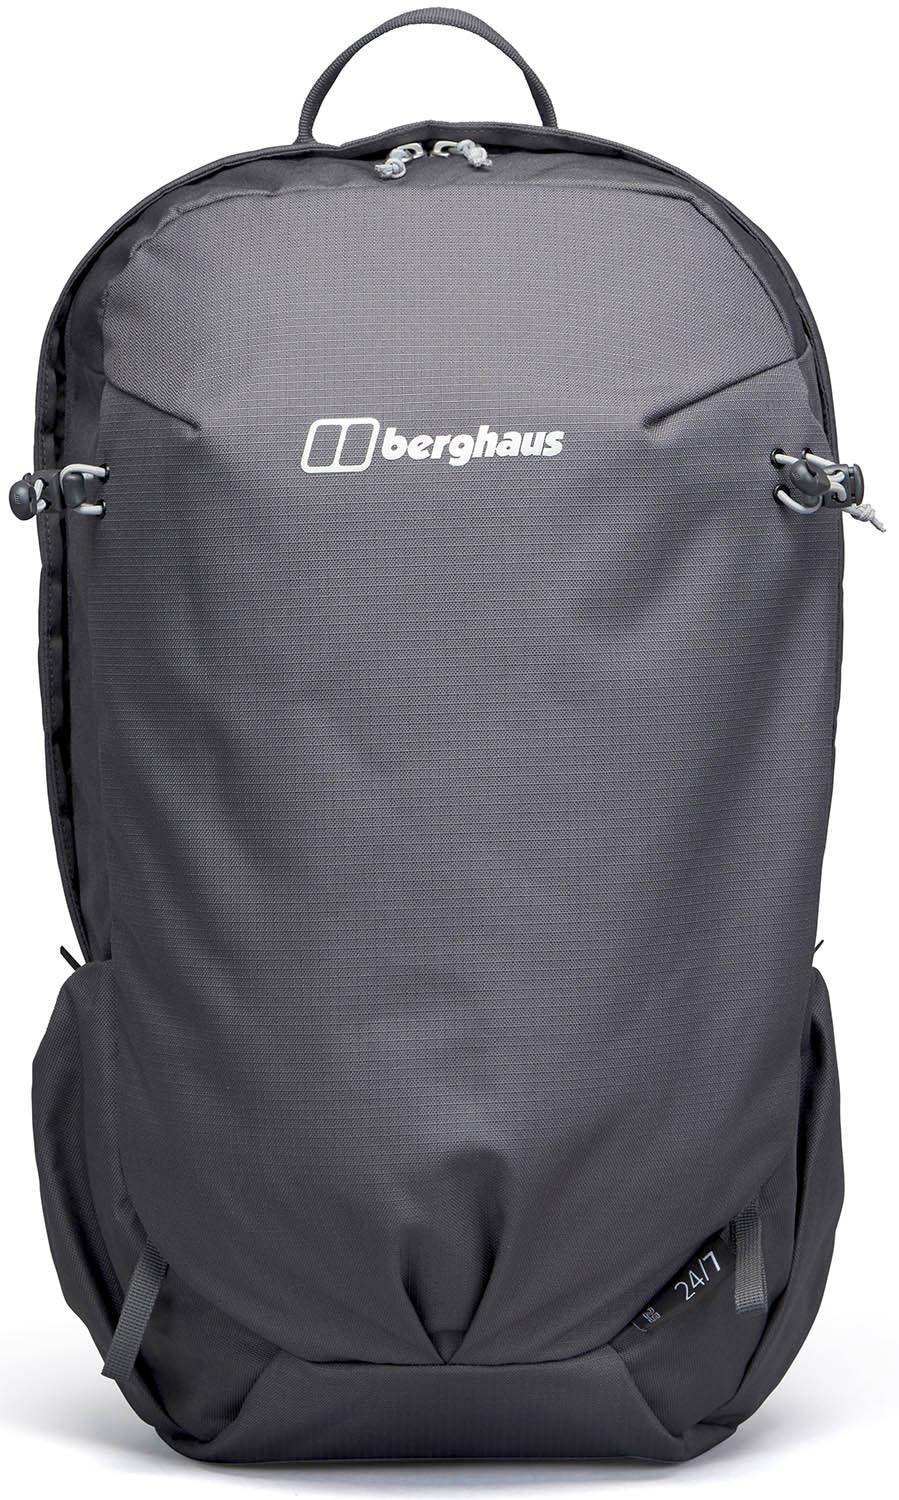 Berghaus 24/7 25 Backpack - Grey / Black